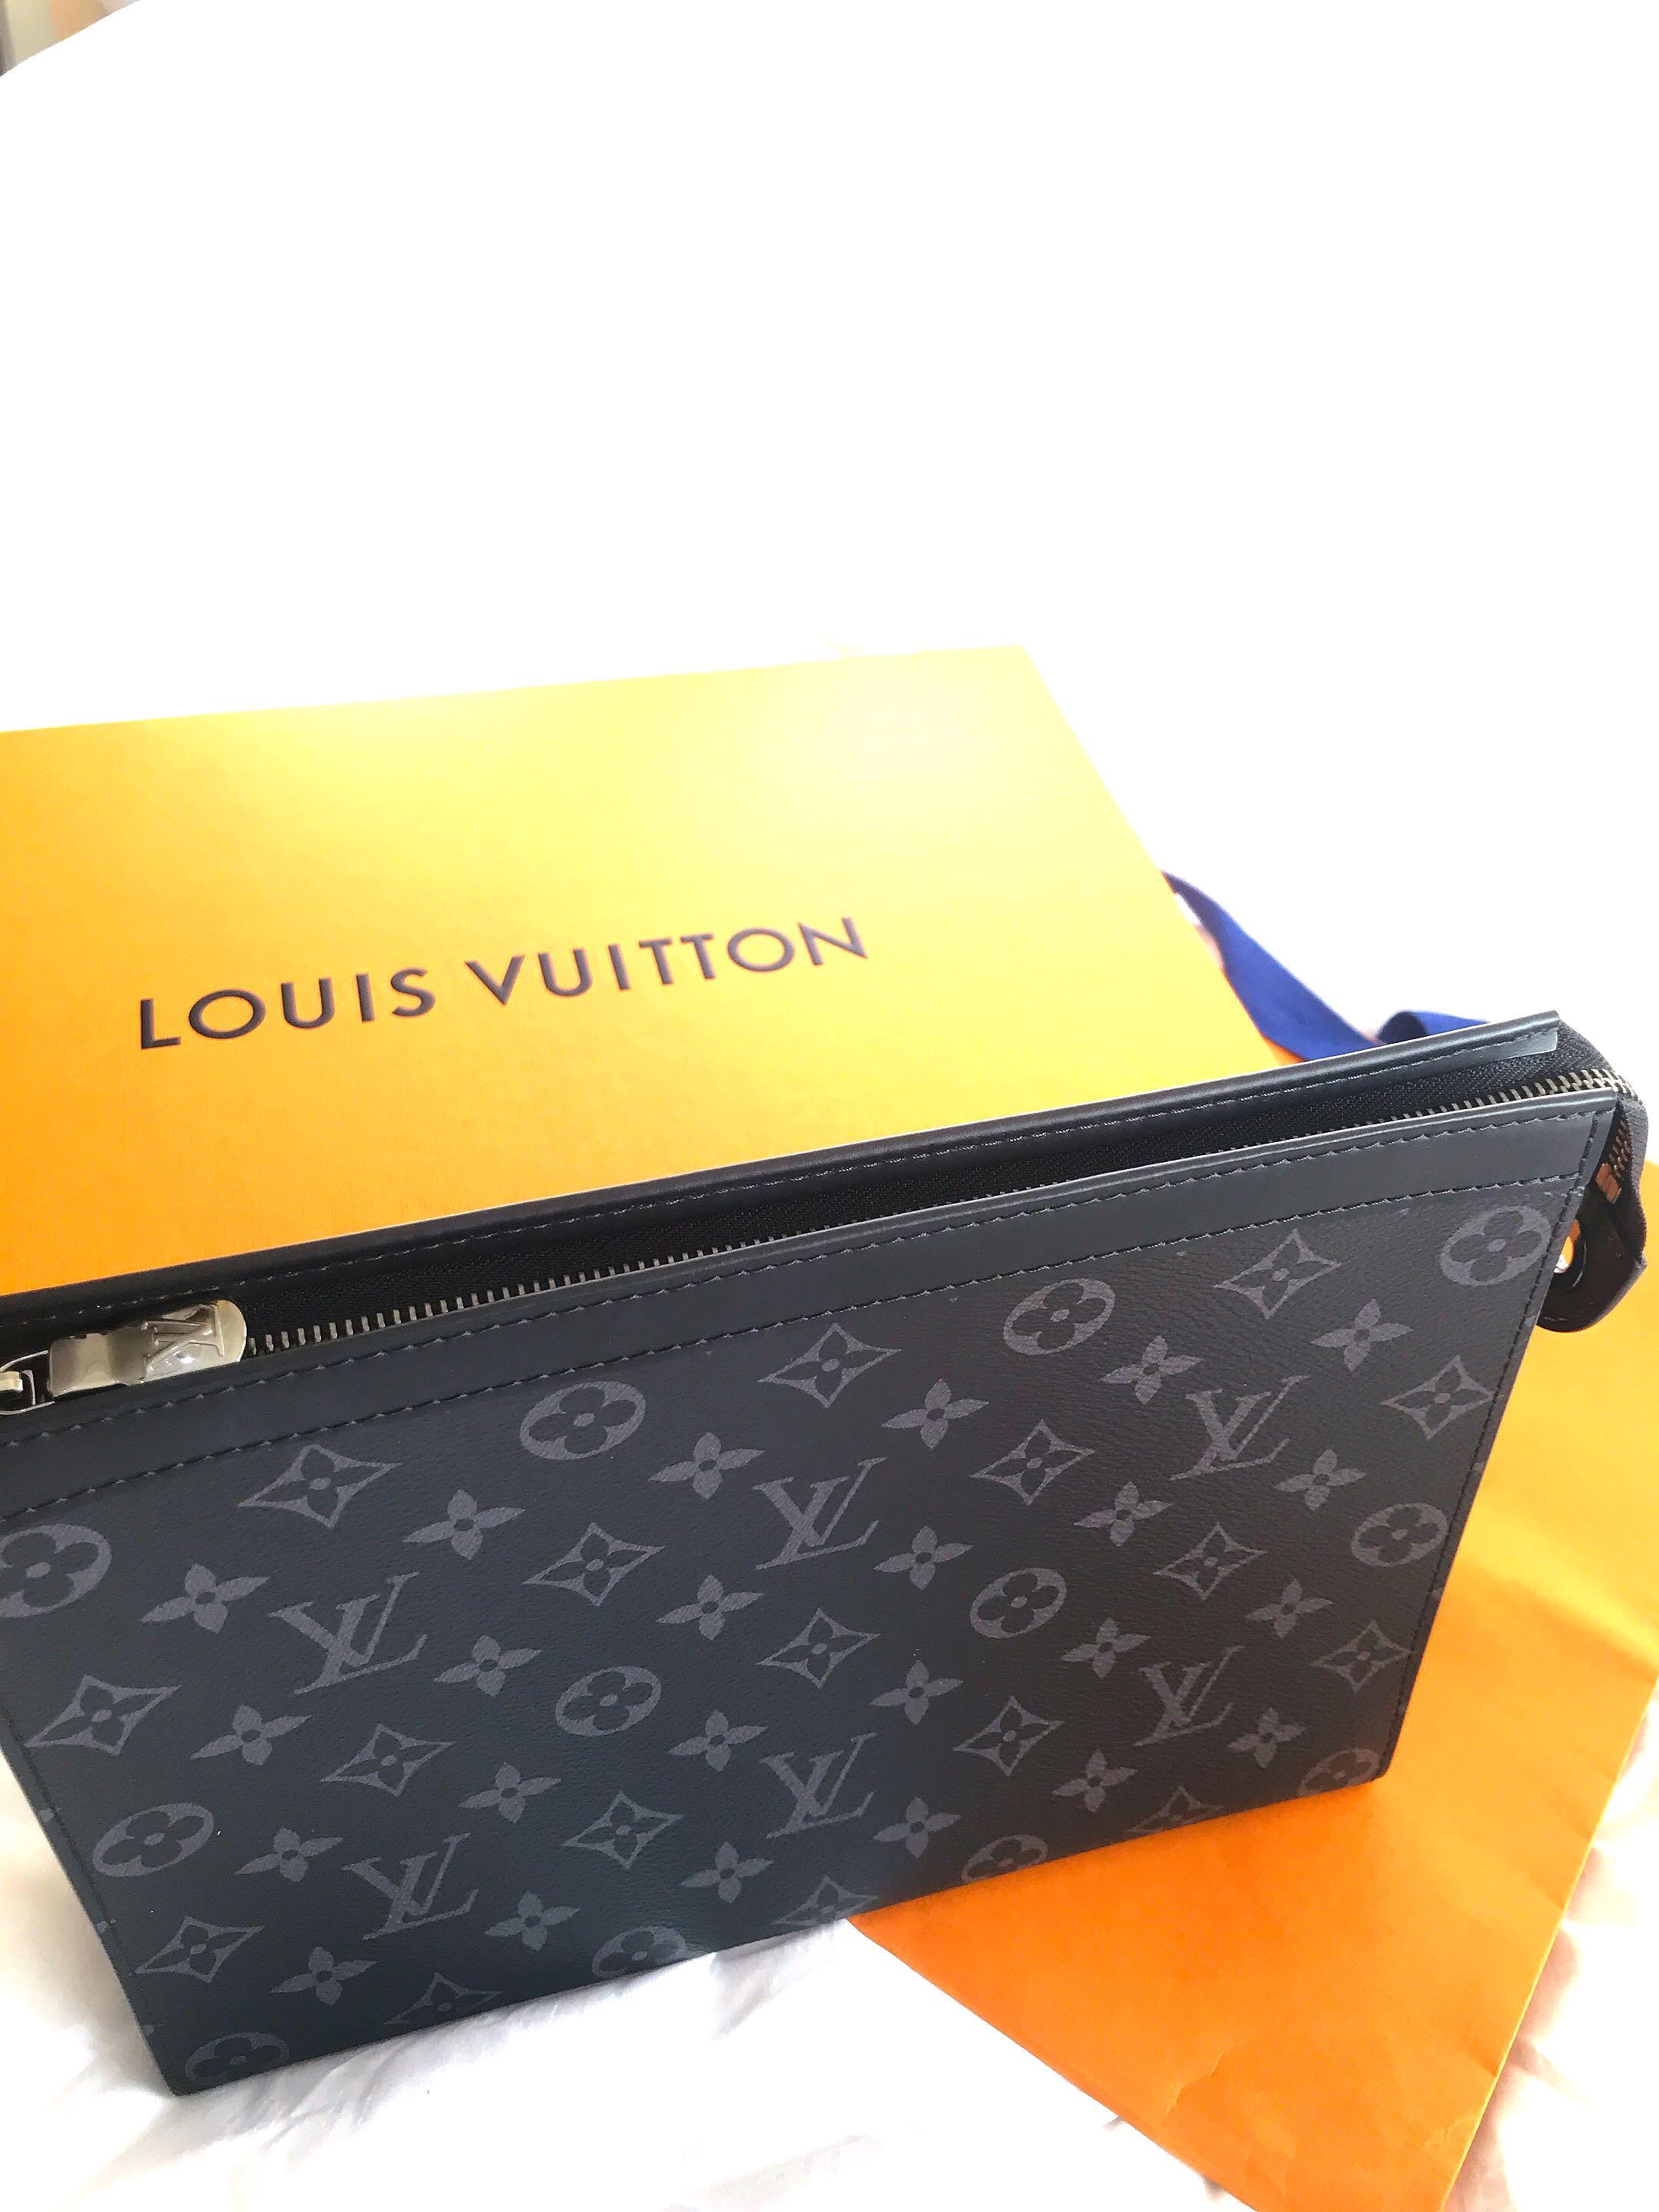 Louis Vuitton Pochette Men’s Clutch *Almost New* No Trades please